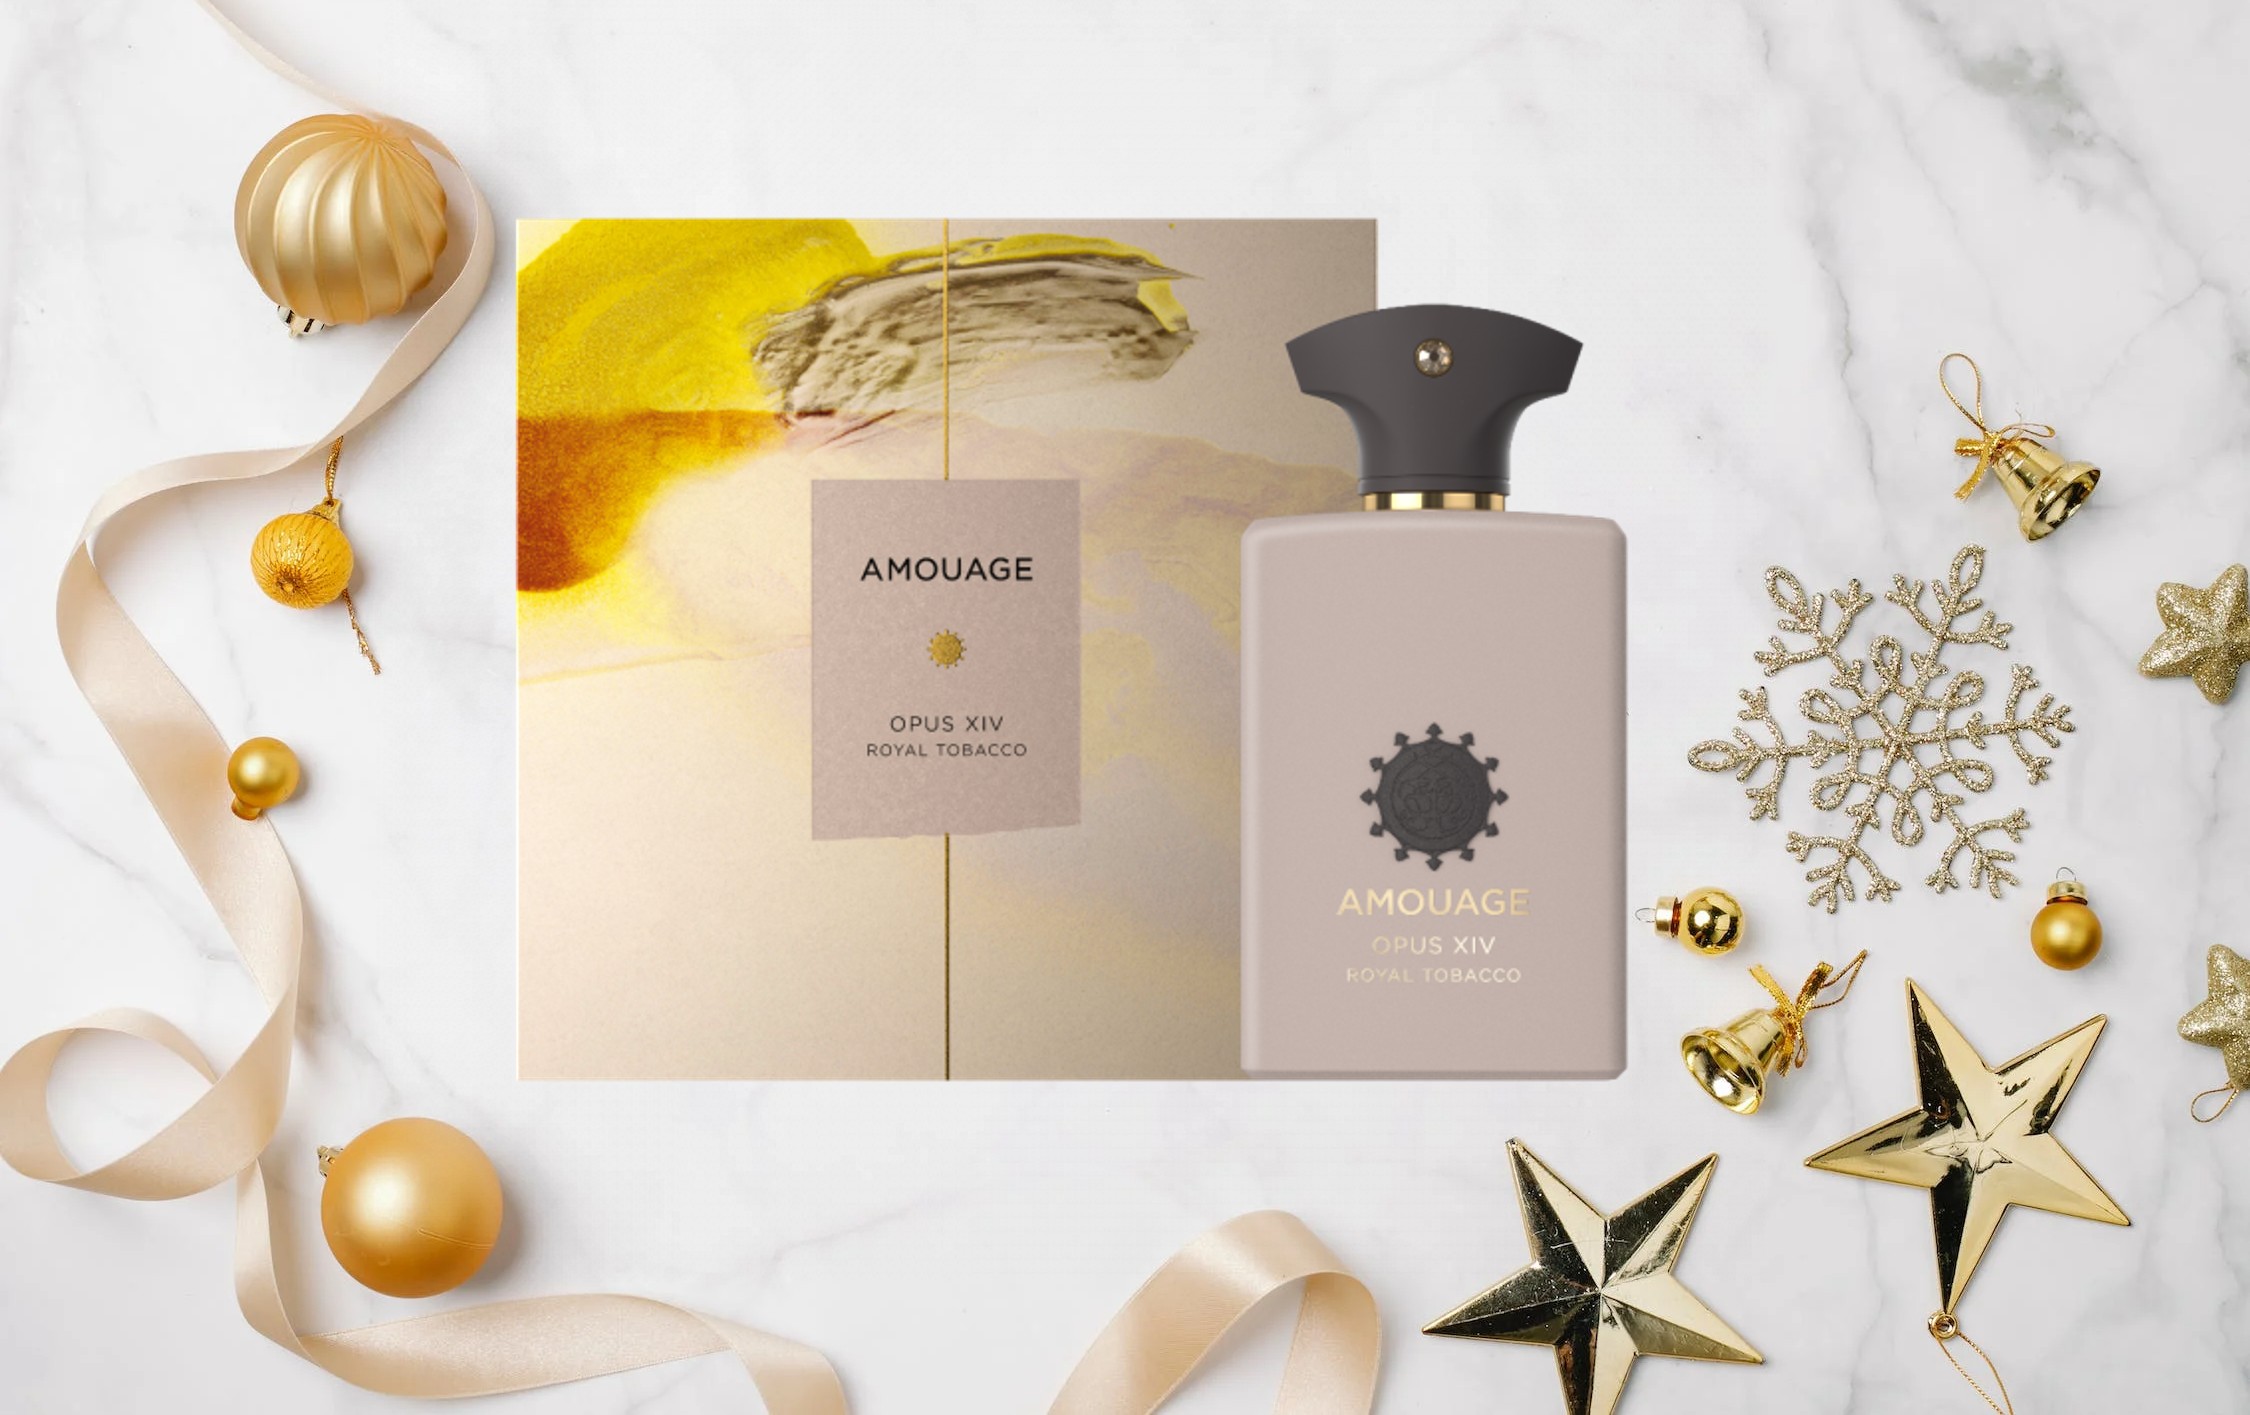 amouage, Opus XIV Royal Tobacco, holiday fragrances